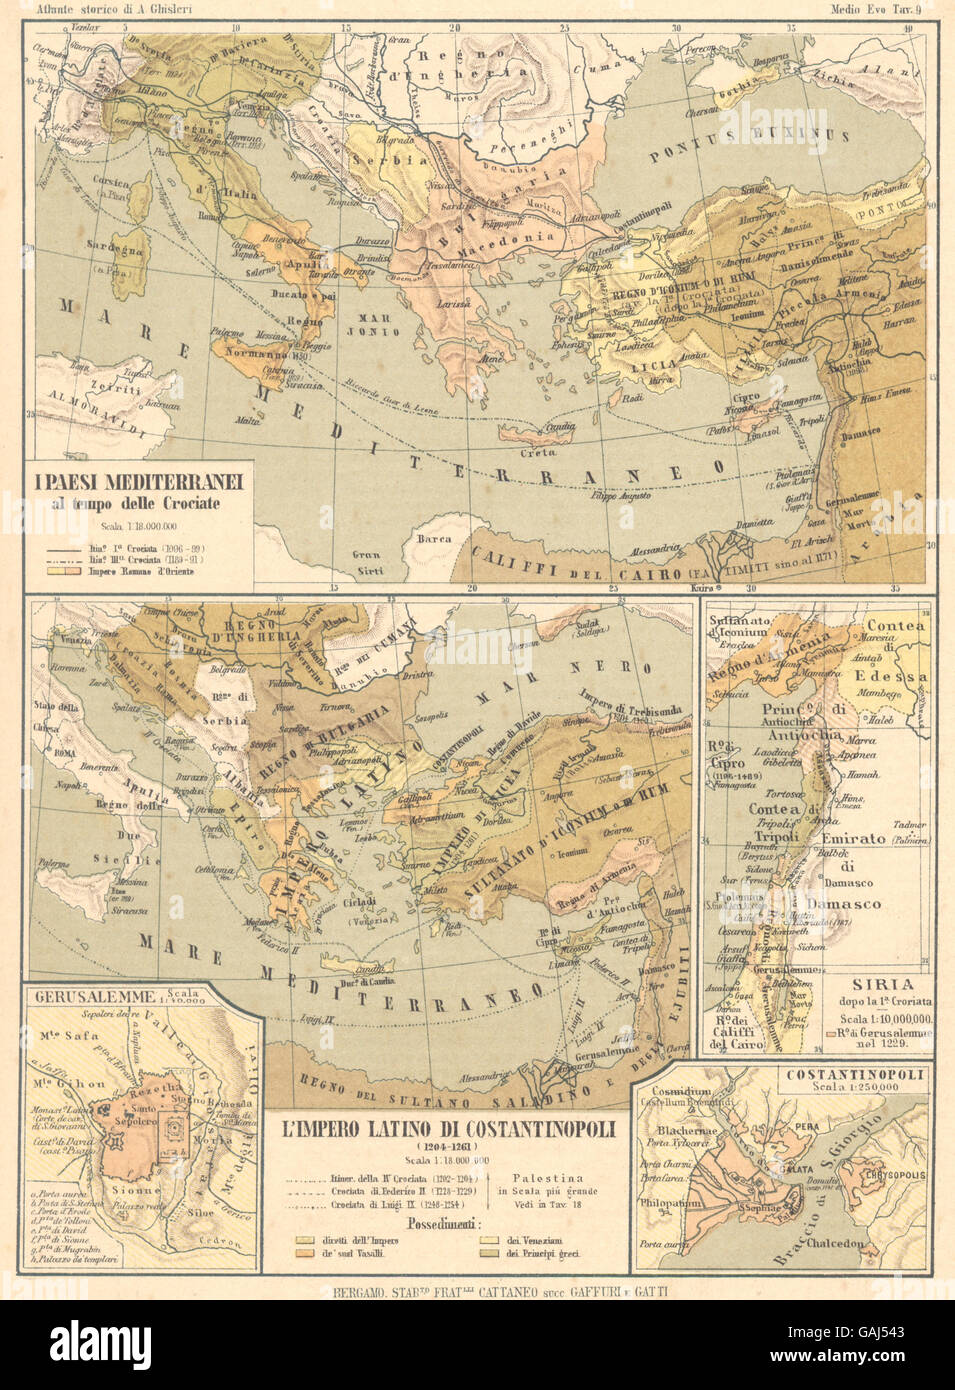 MEDITERRANEI CROCIATE: Gerusalemme Impero latino a Costantinopoli, Siria, 1889 Mappa Foto Stock